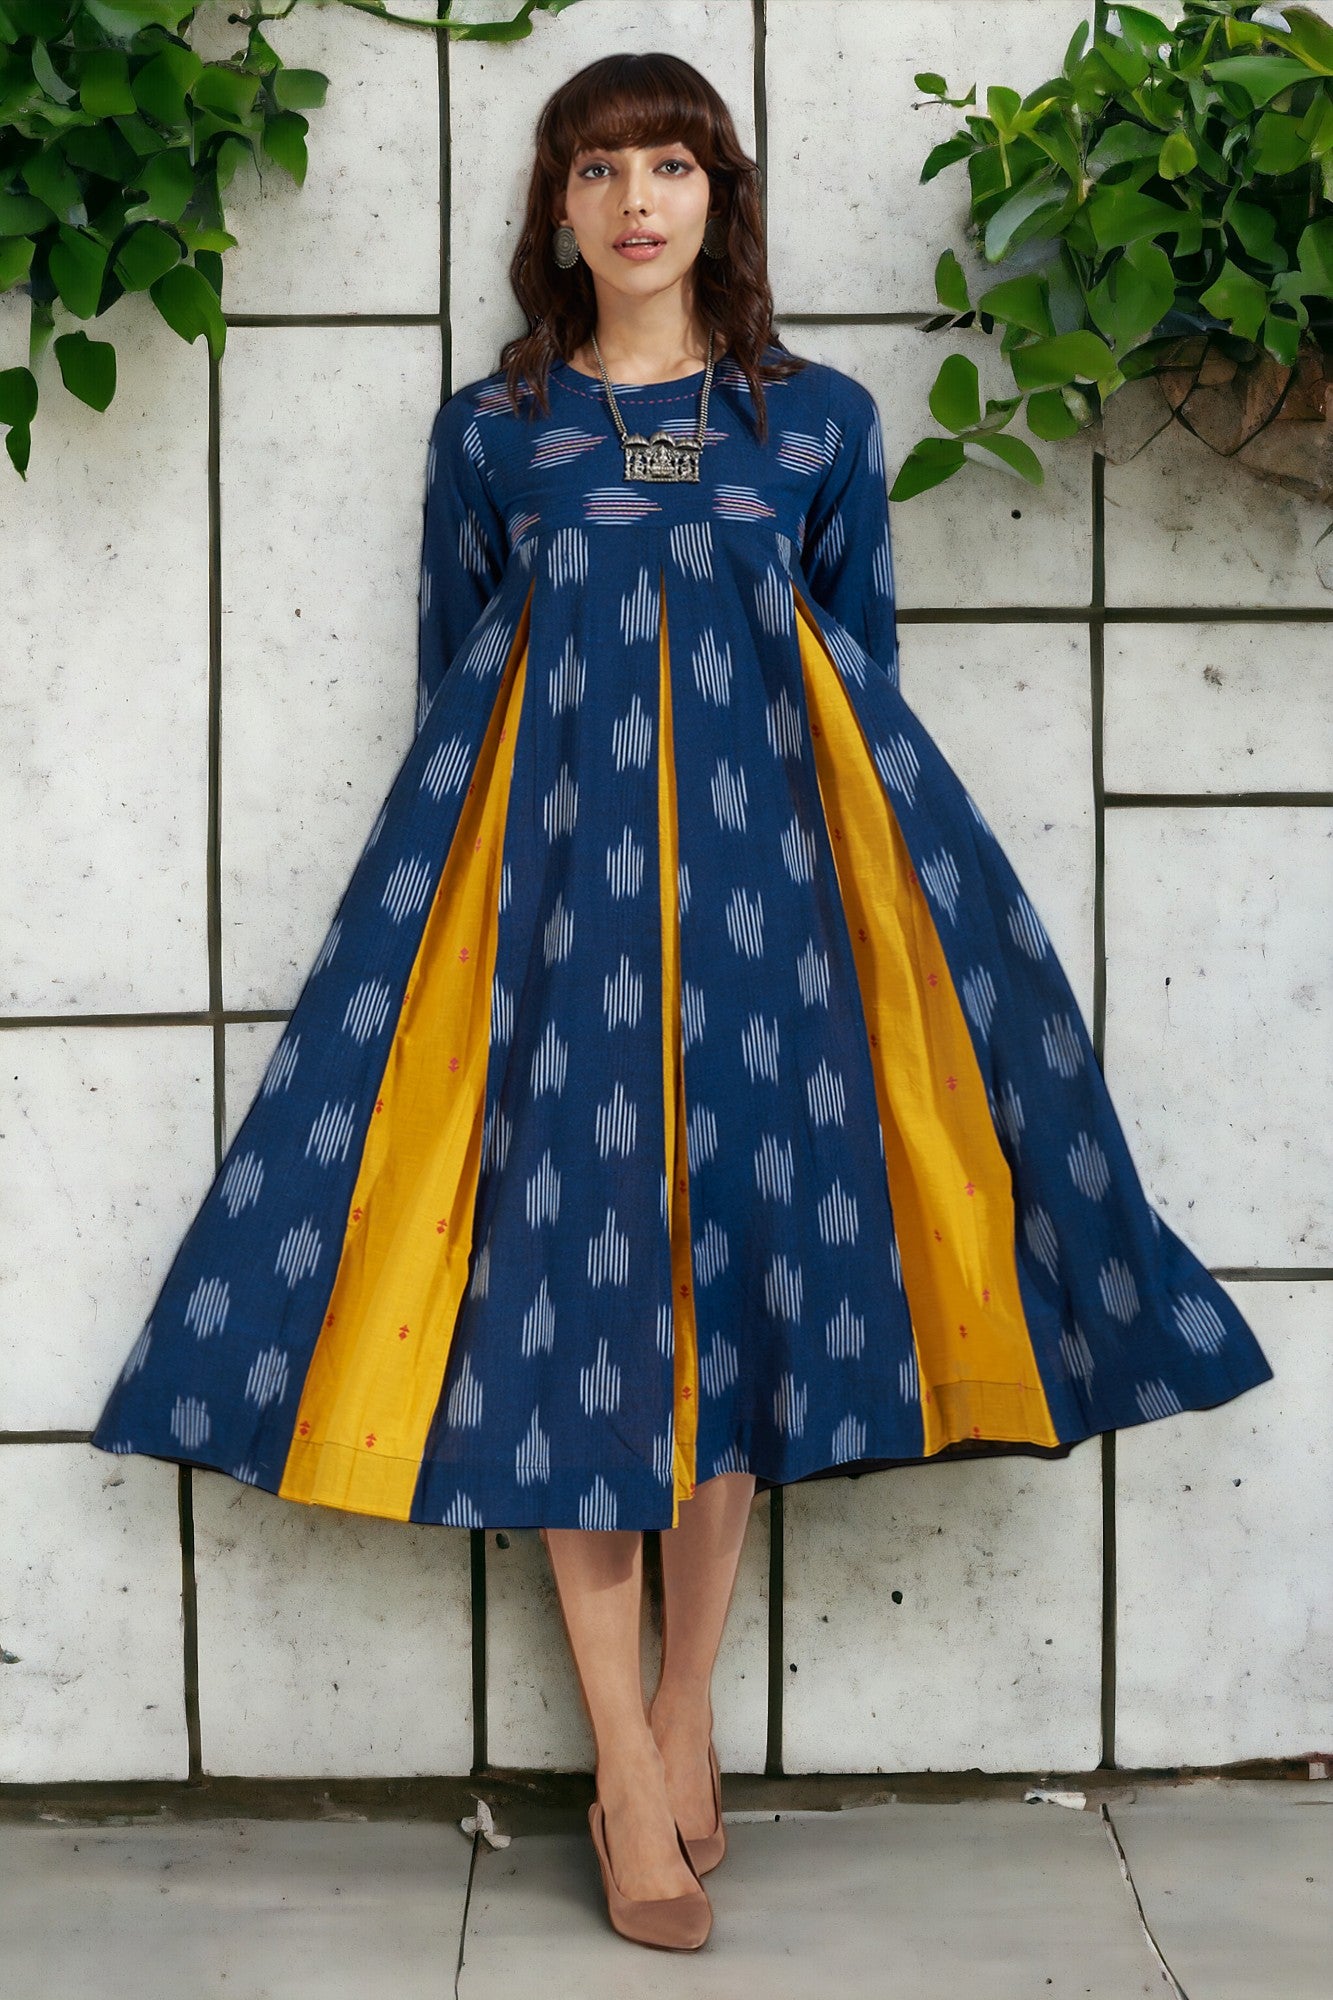 box pleat dress with pockets - luminous blue & gold charm